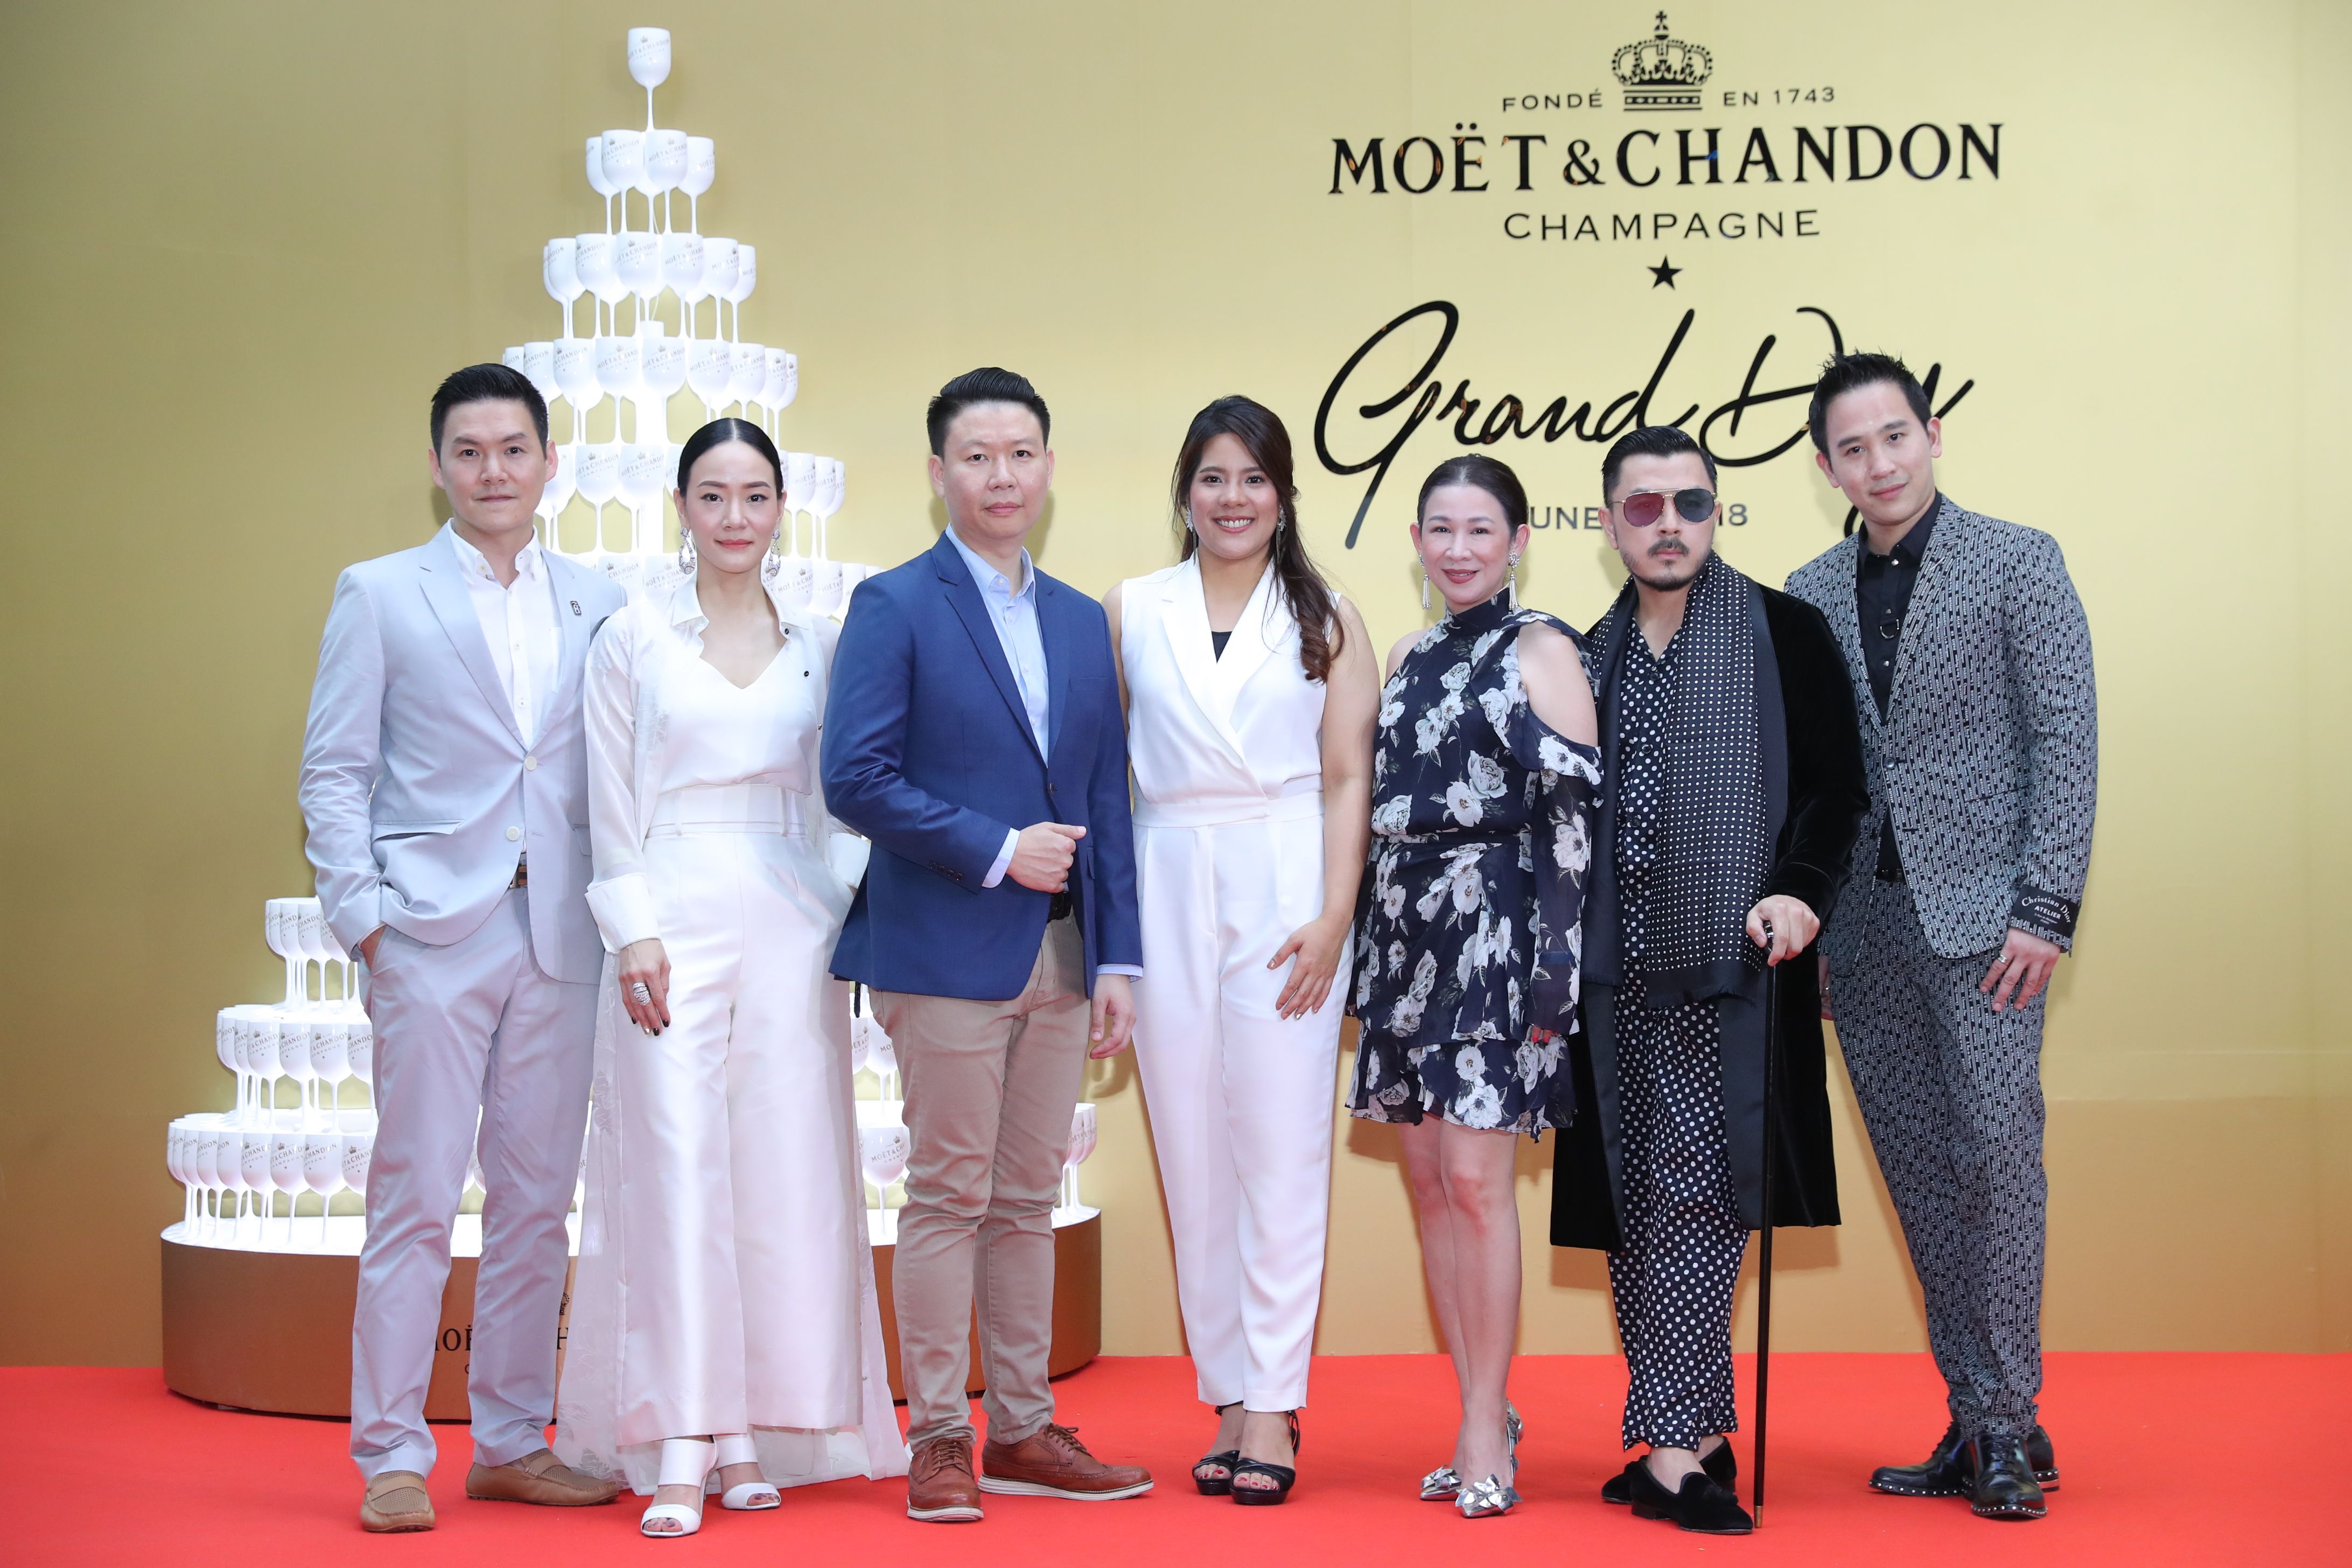 Moët & Chandon Grand Day Celebrates A Sparkling Toast in Bangkok